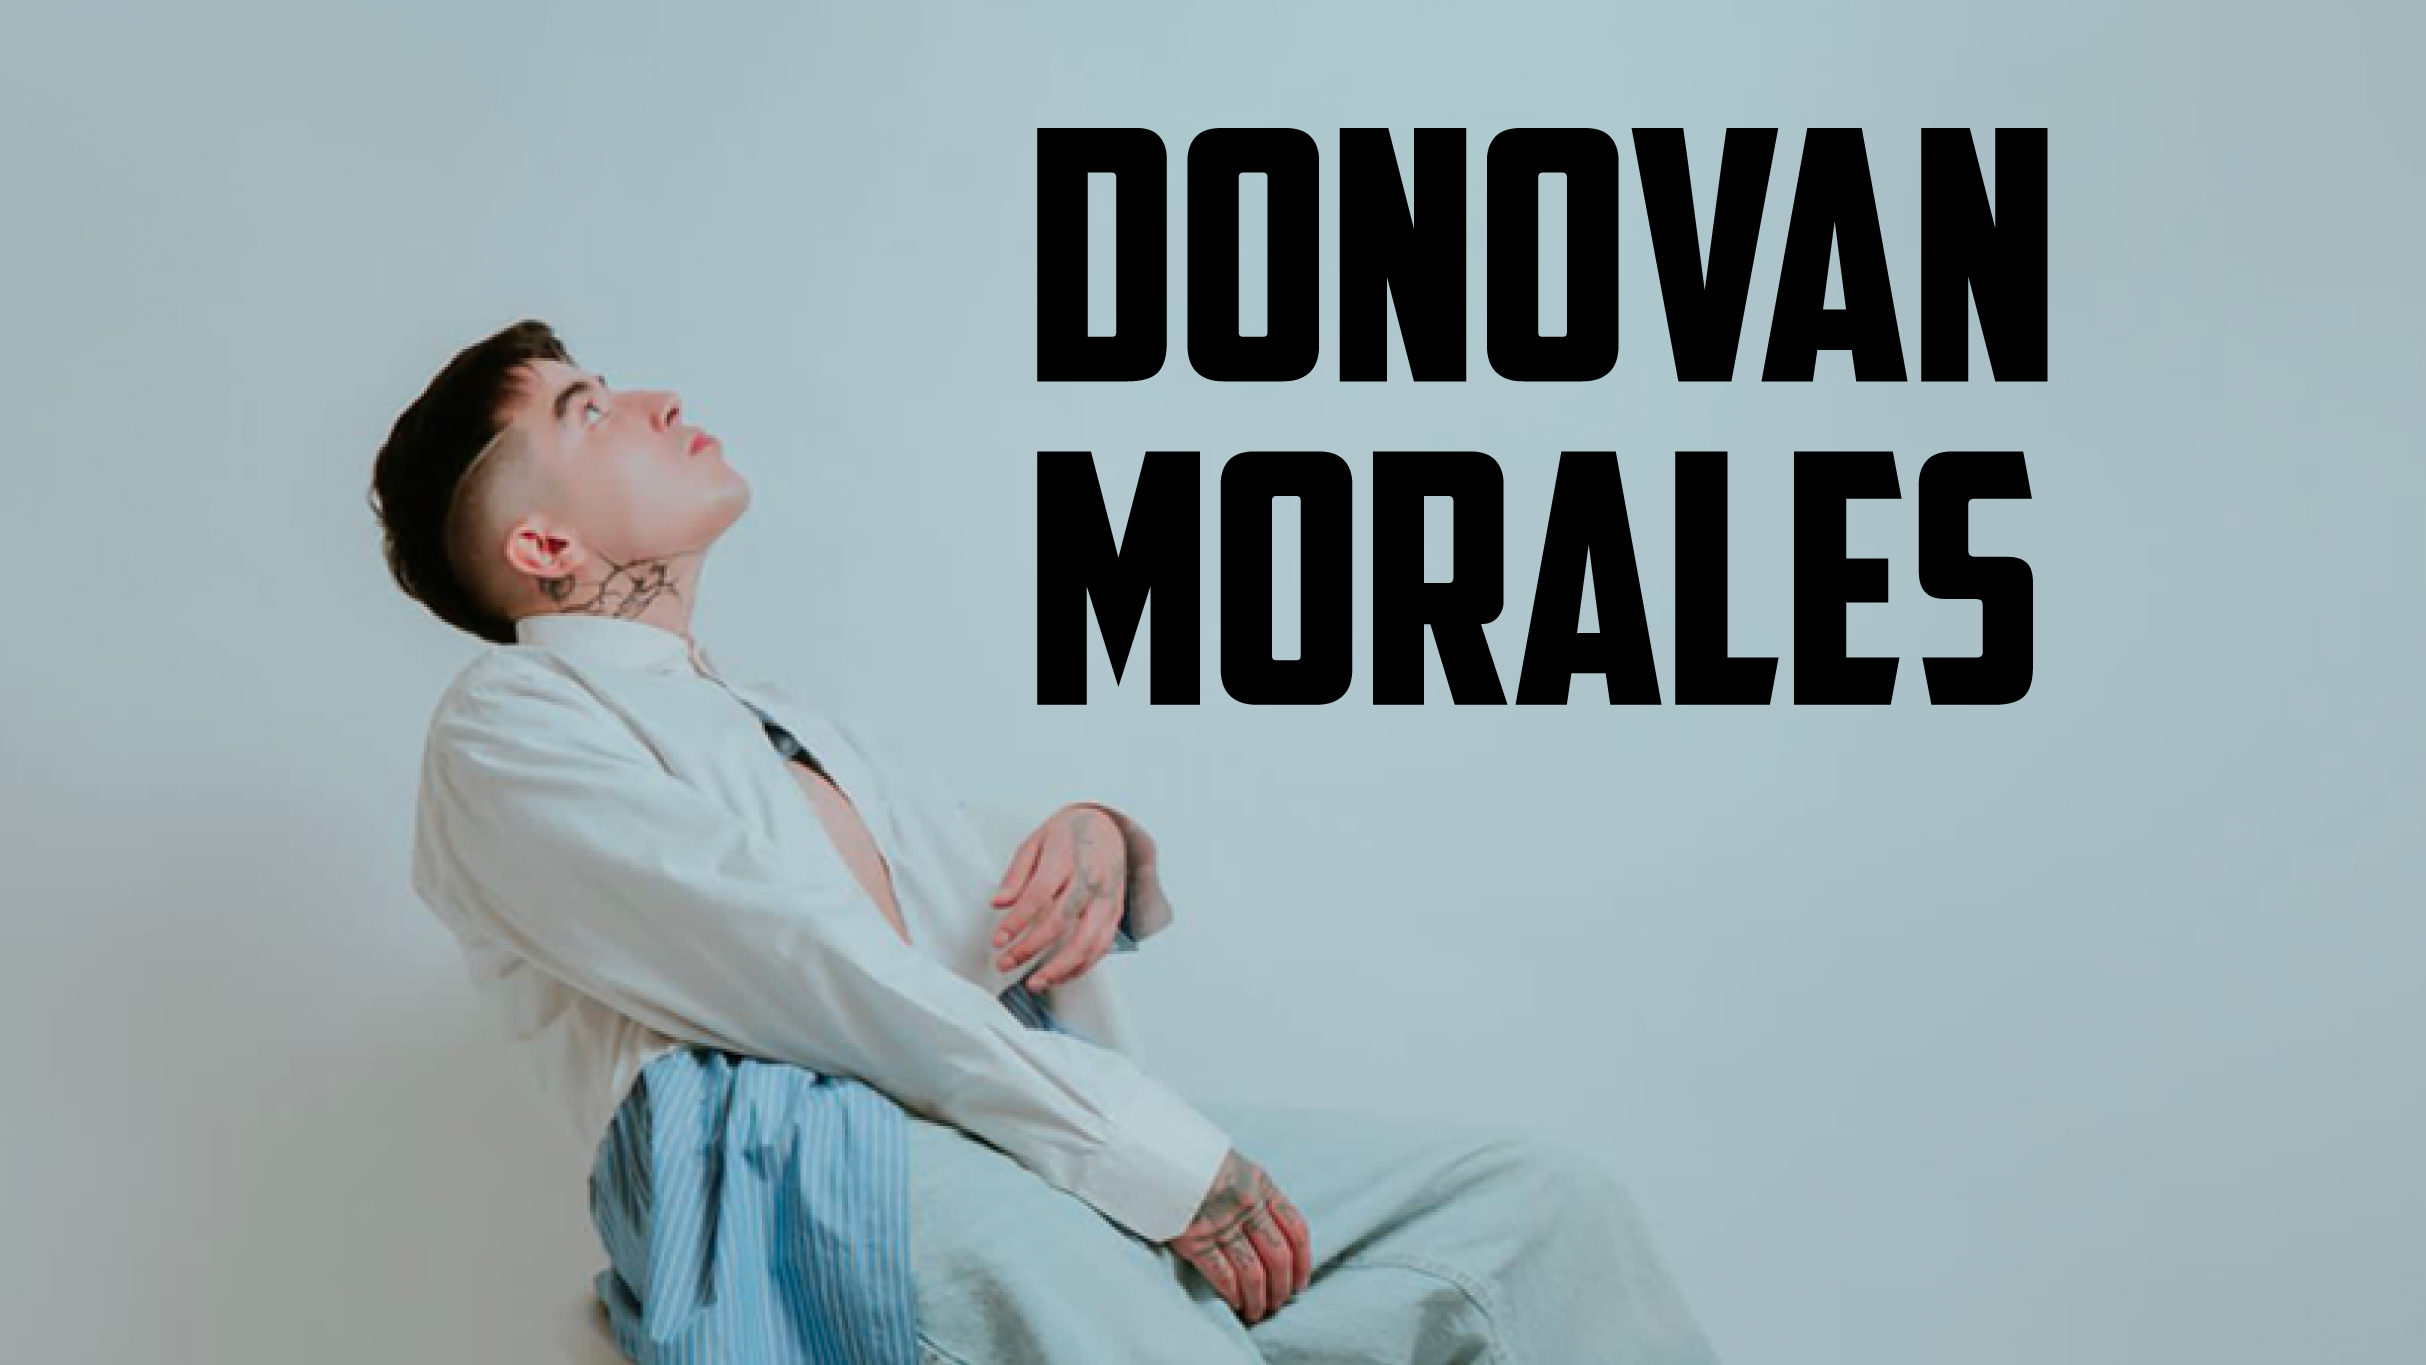 Donovan Morales